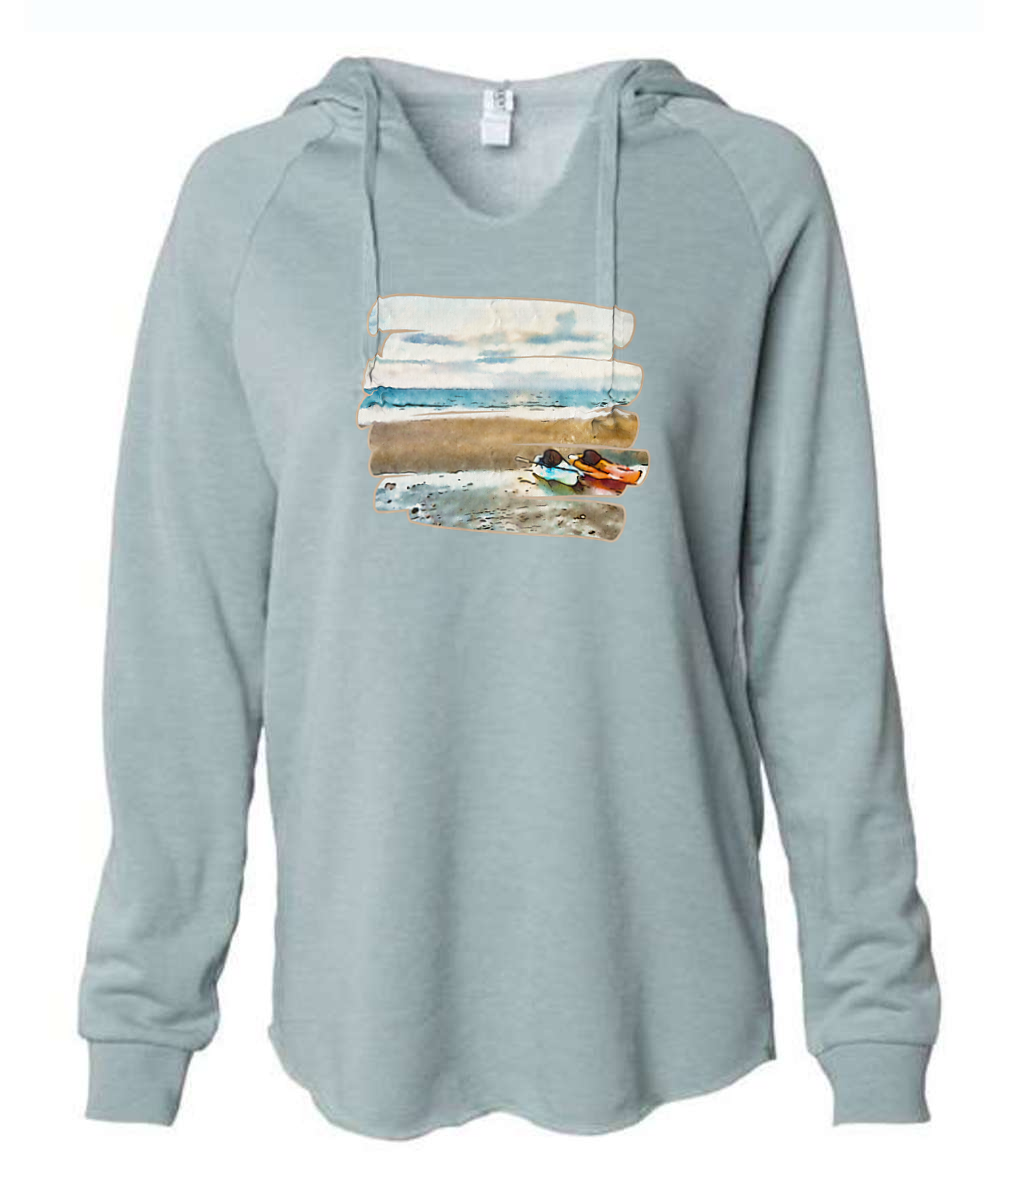 twin kayak hoodie sweatshirt - Jacqueline MB Designs 